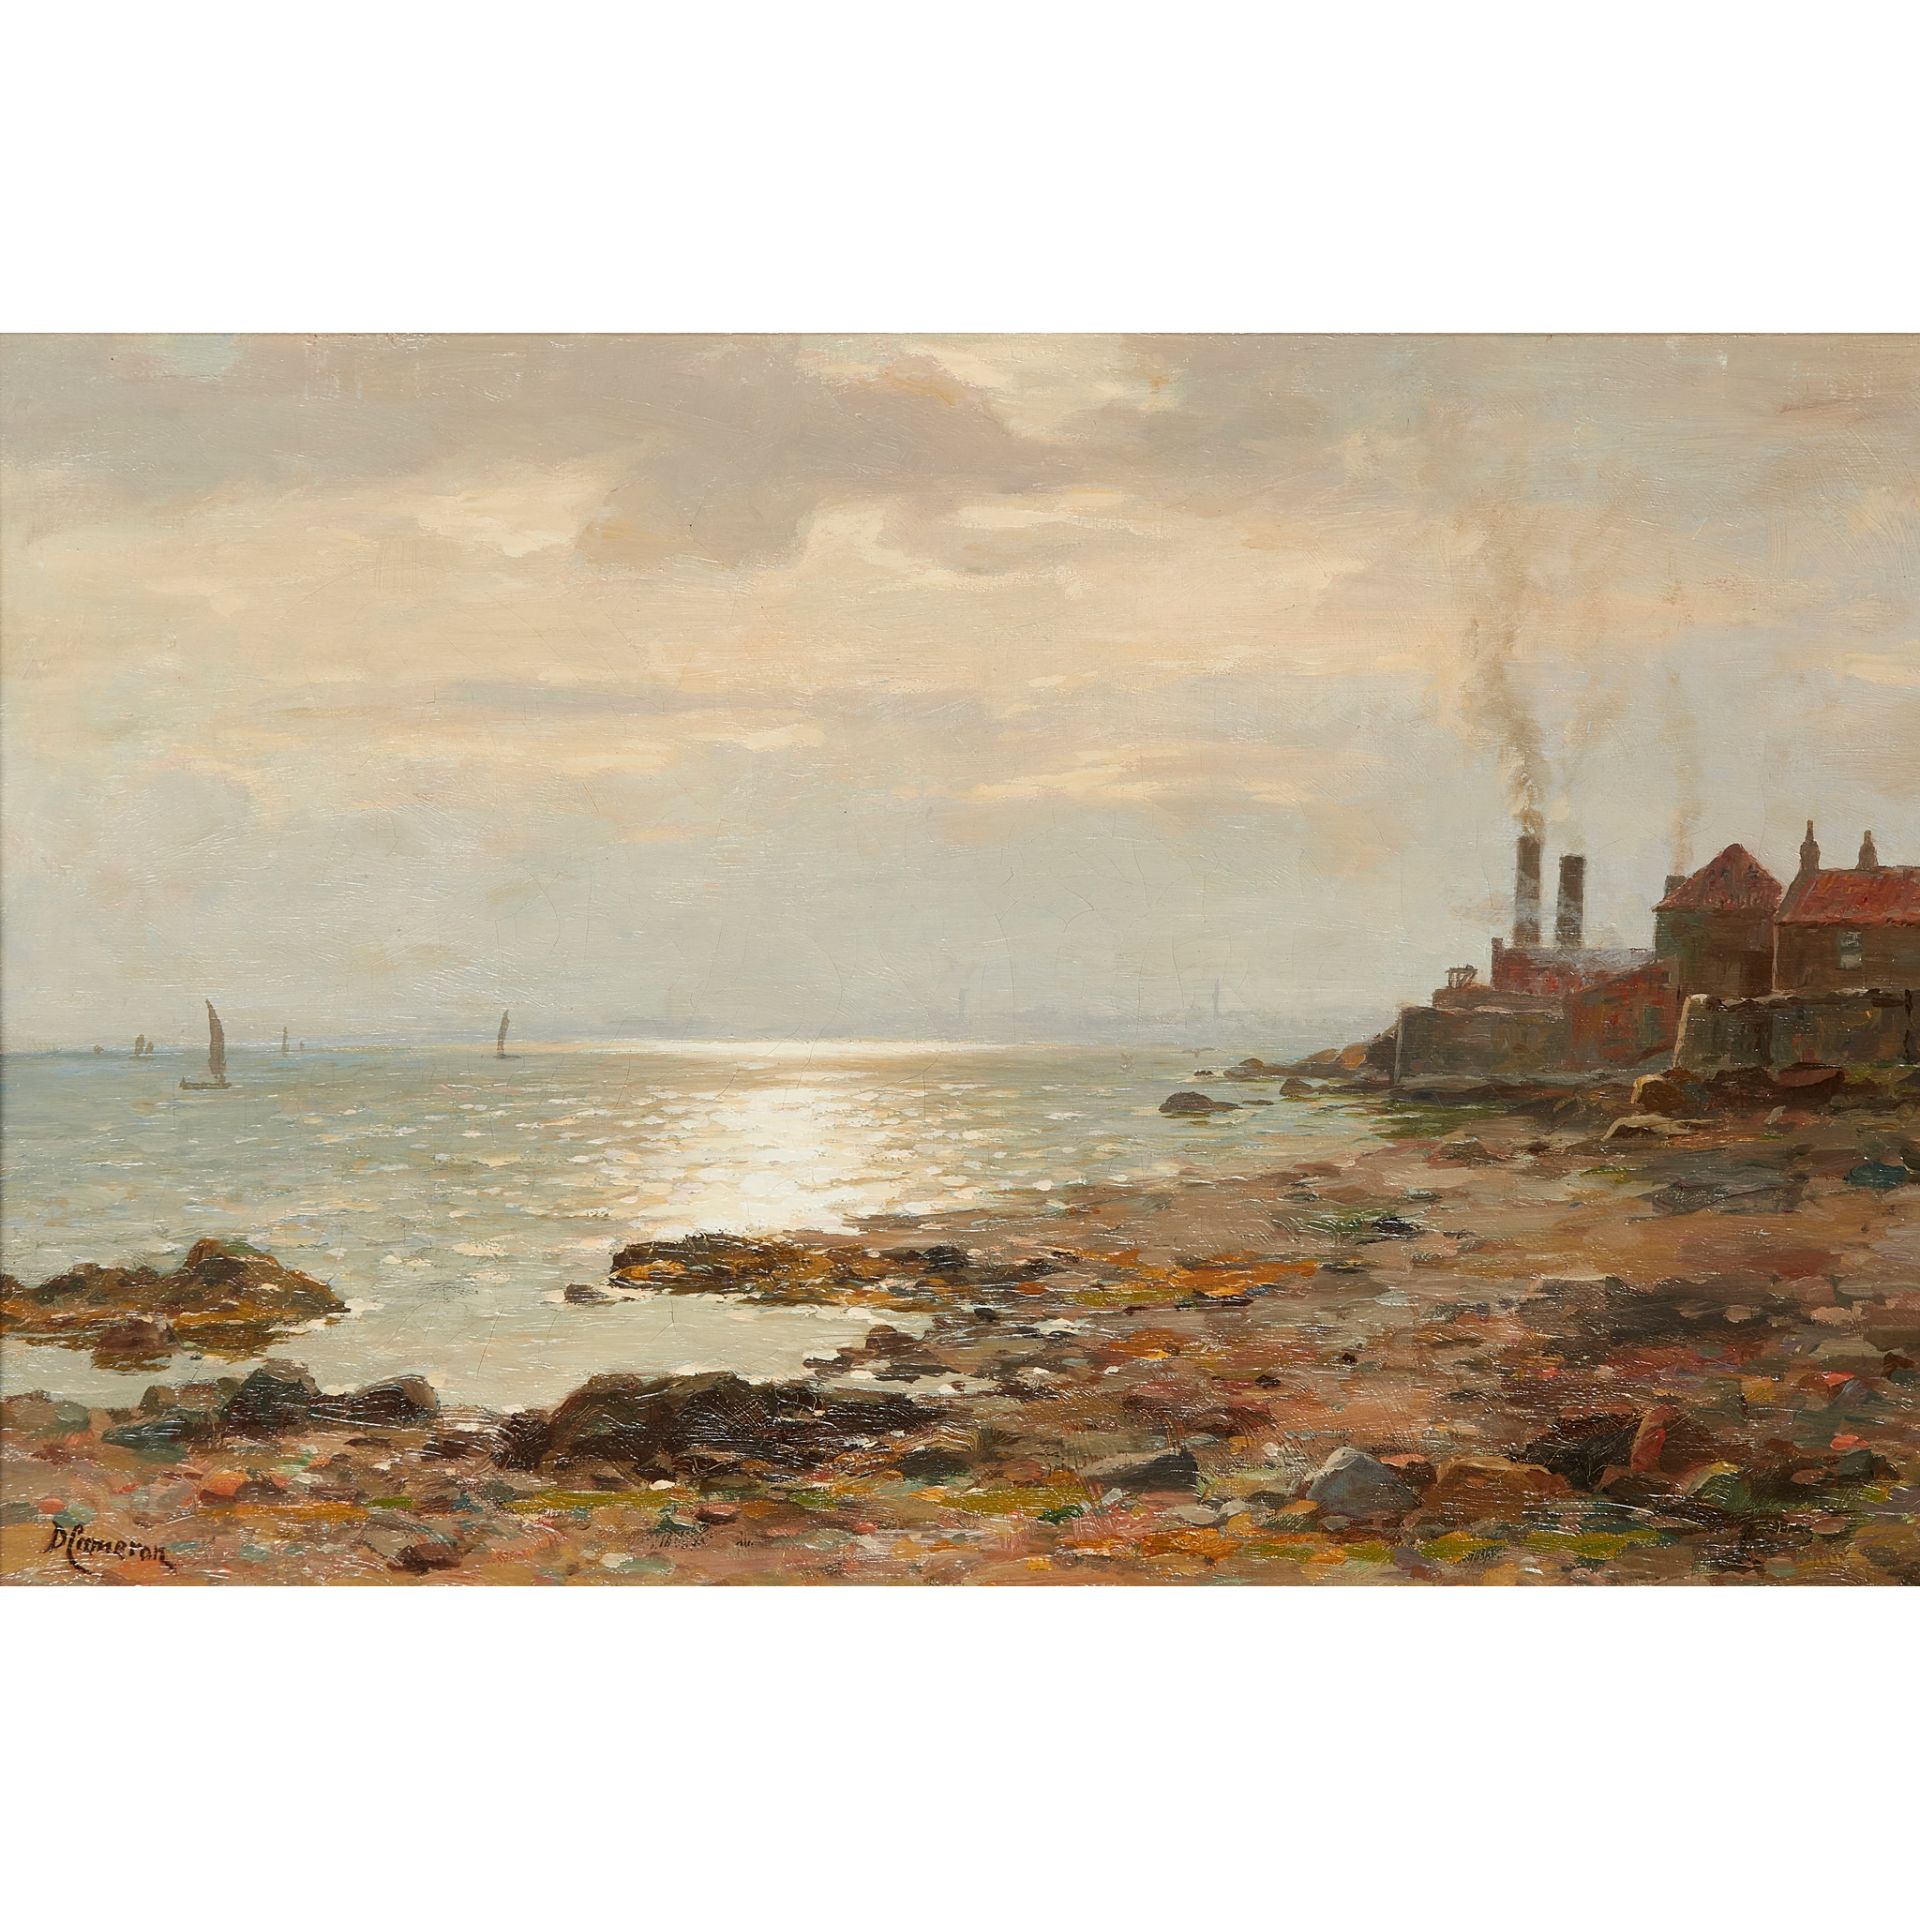 DUNCAN CAMERON (SCOTTISH 1837-1916) SUNSET ON THE EAST COAST